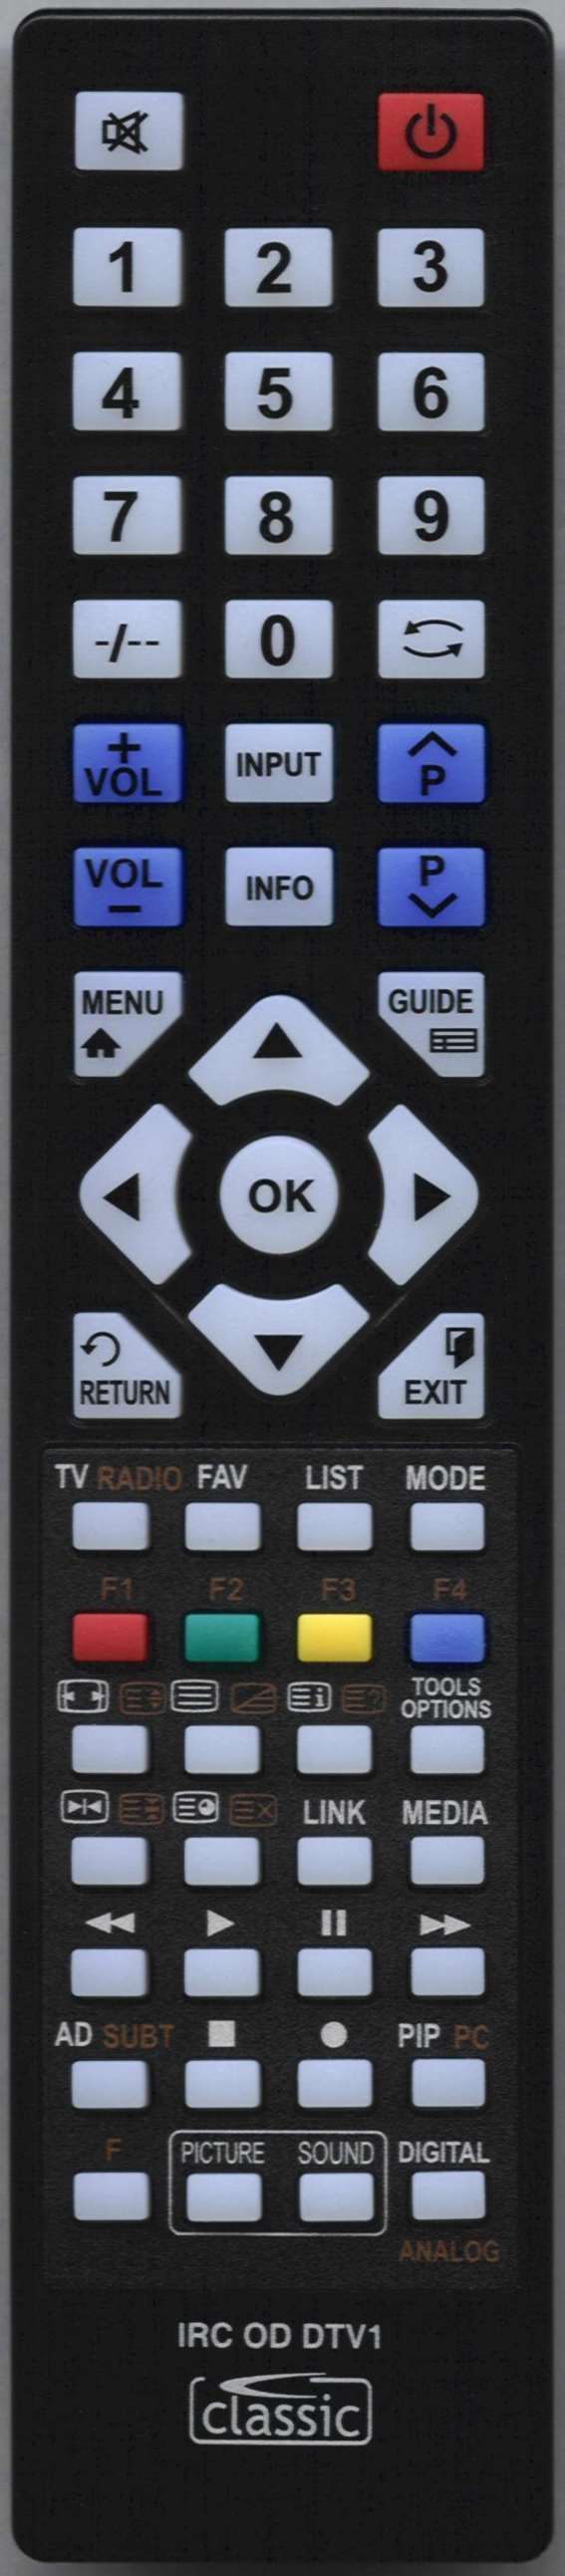 ORION TV32FX100D Remote Control